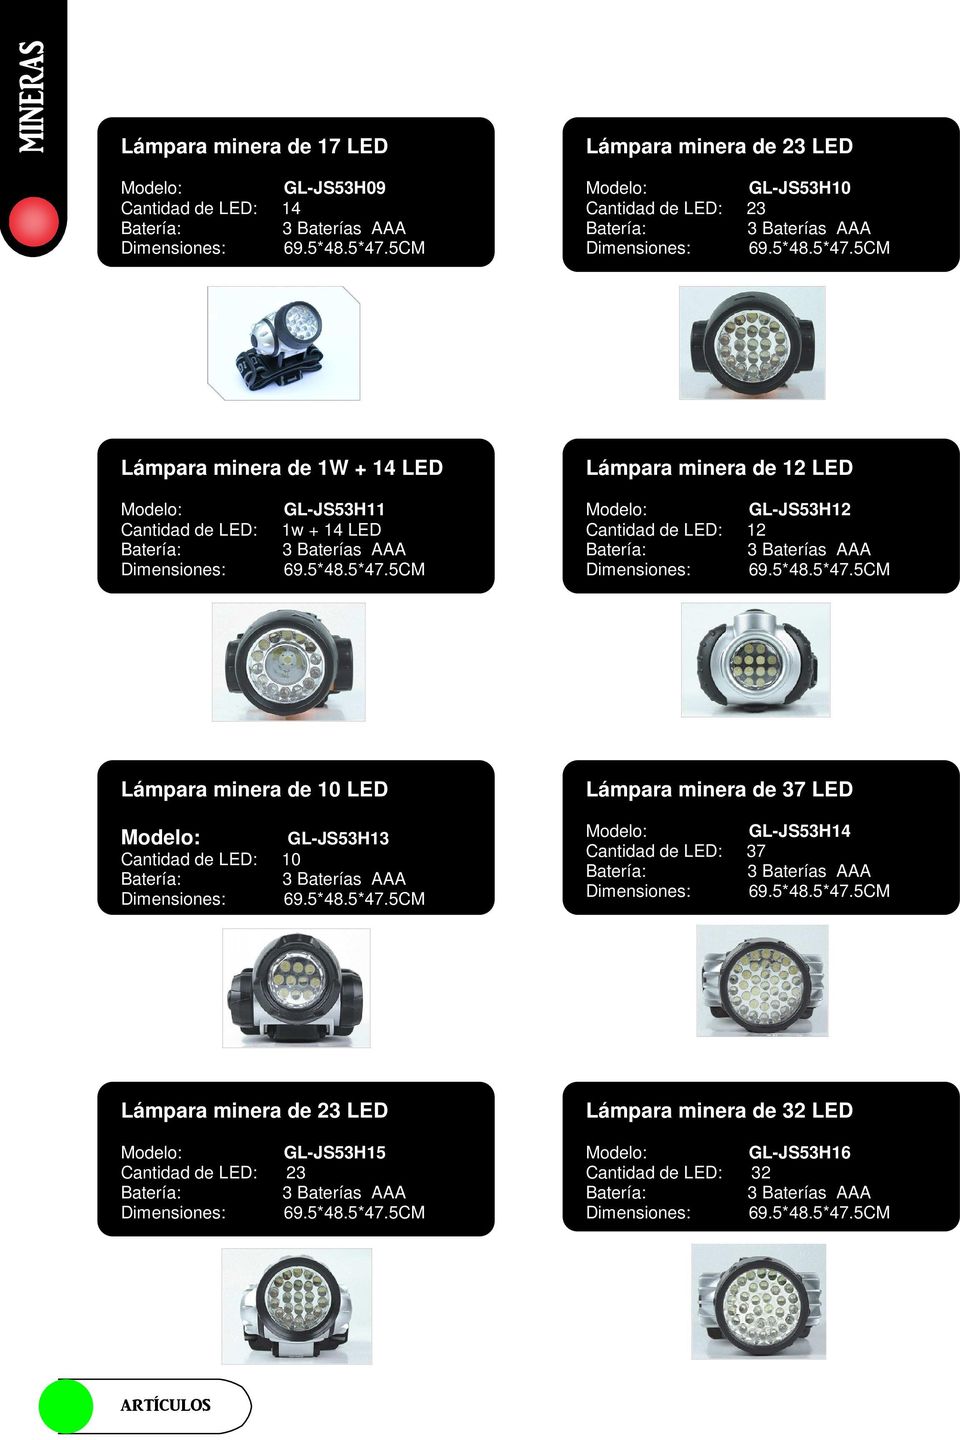 5CM Lámpara minera de 1W + 14 LED Lámpara minera de 12 LED Cantidad de LED: GL-JS53H11 1w + 14 LED 69.5*48.5*47.5CM GL-JS53H12 Cantidad de LED: 12 69.